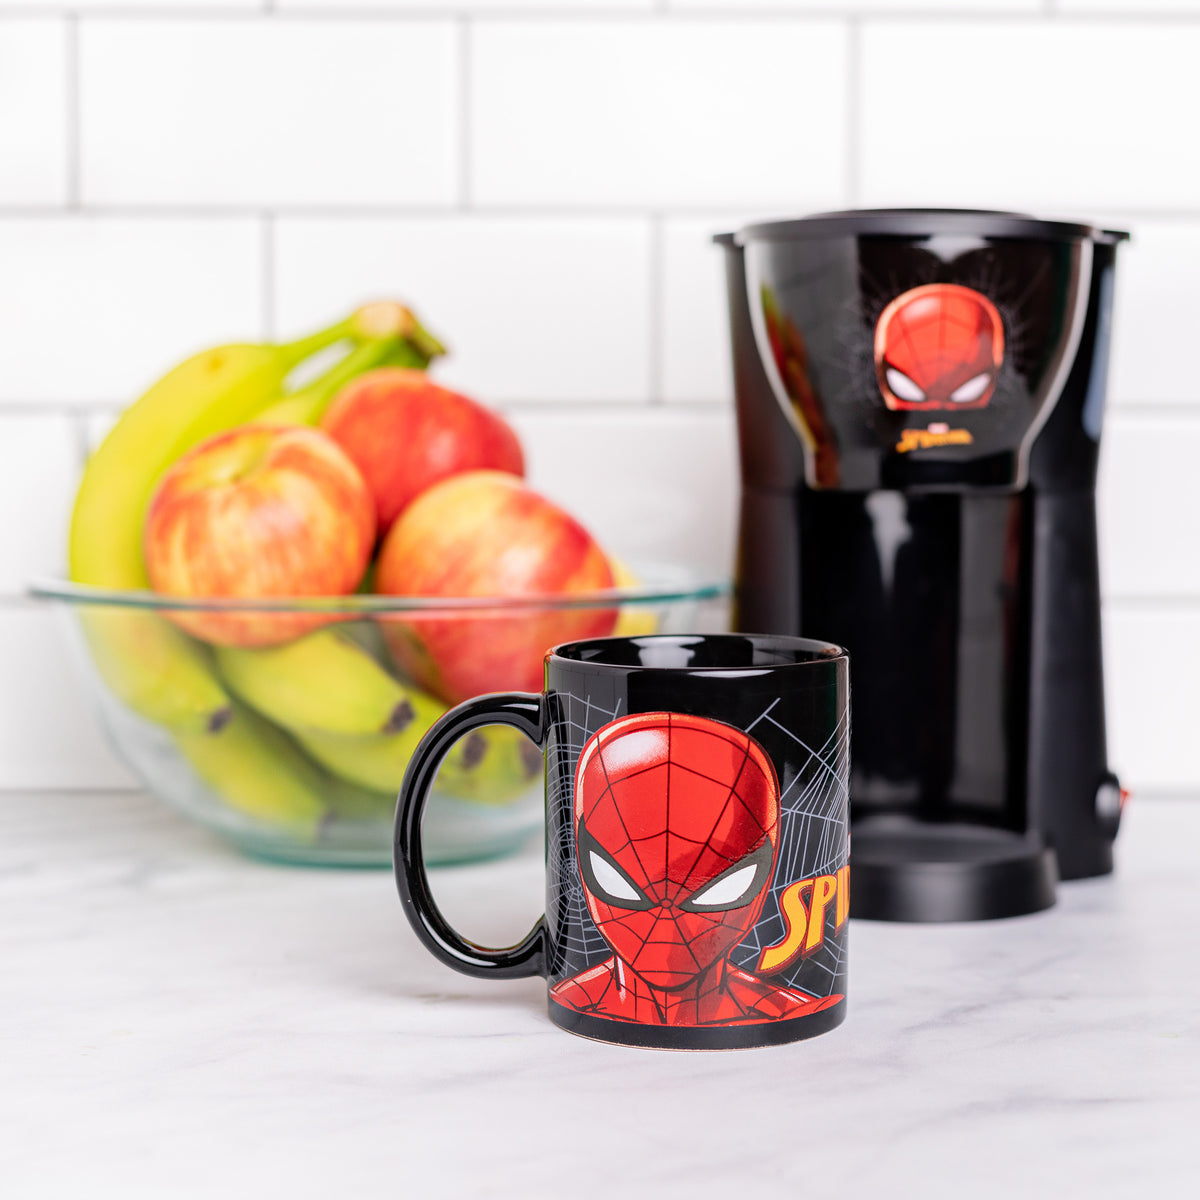 Marvel Spider-Man Coffee Maker Set